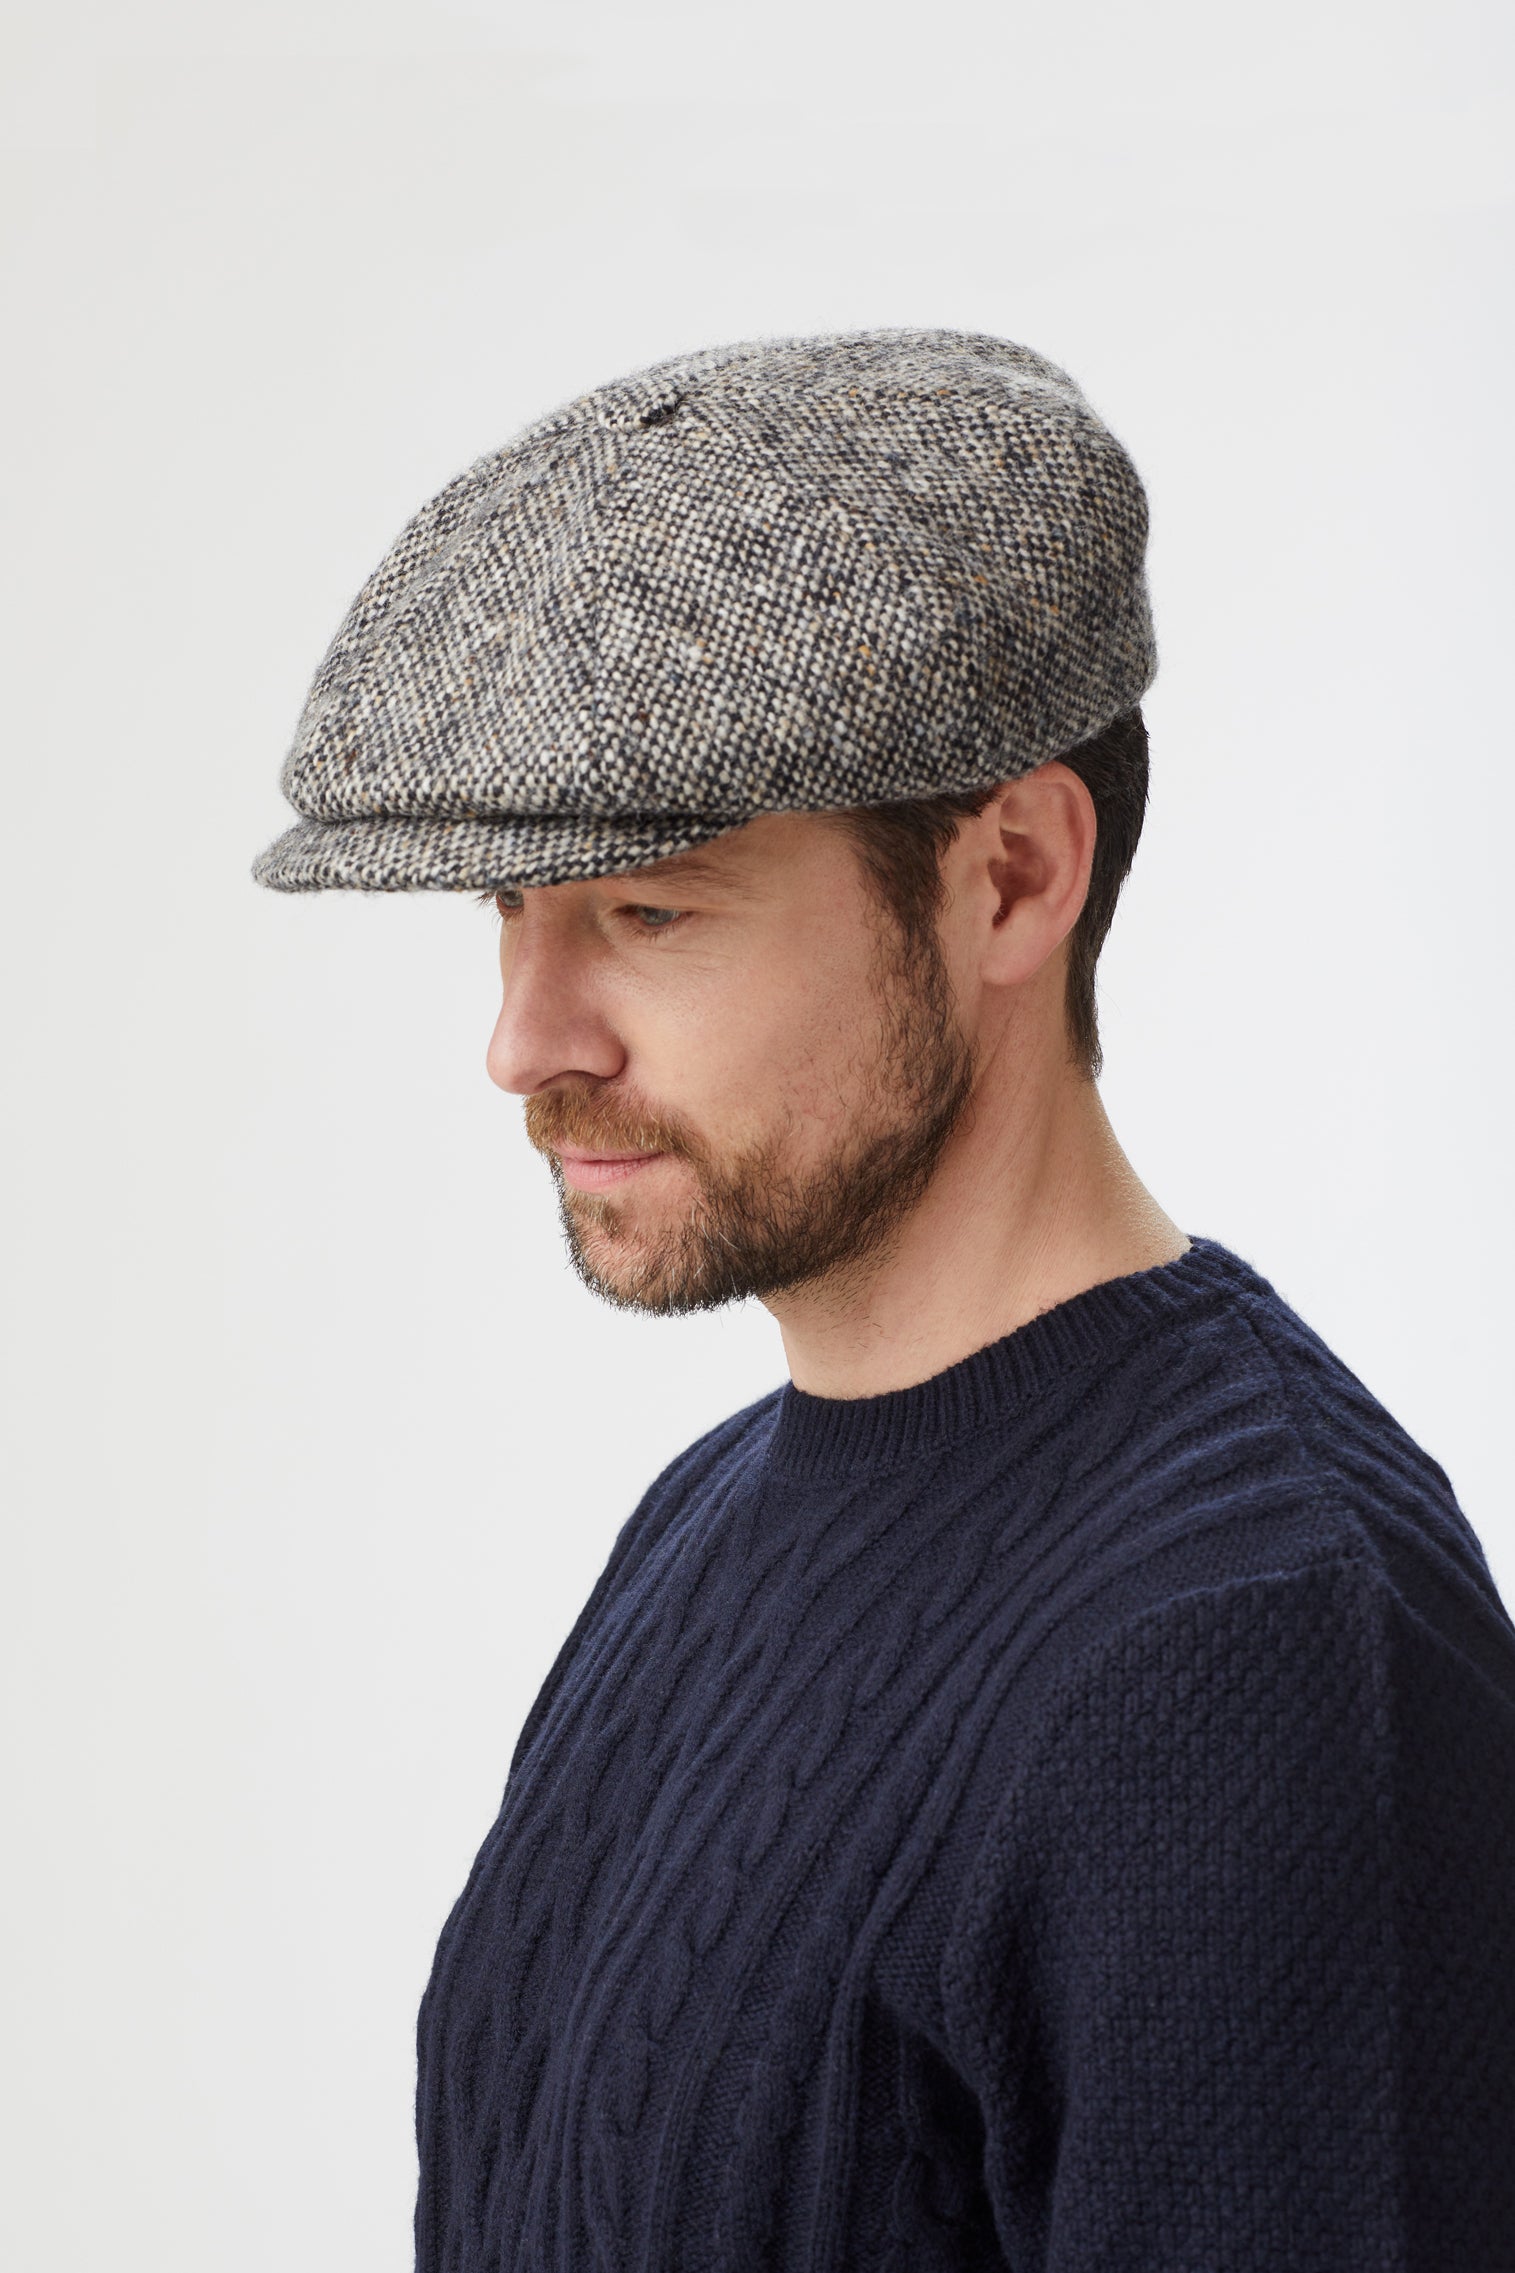 Muirfield Tweed Bakerboy Cap - All Ready to Wear - Lock & Co. Hatters London UK